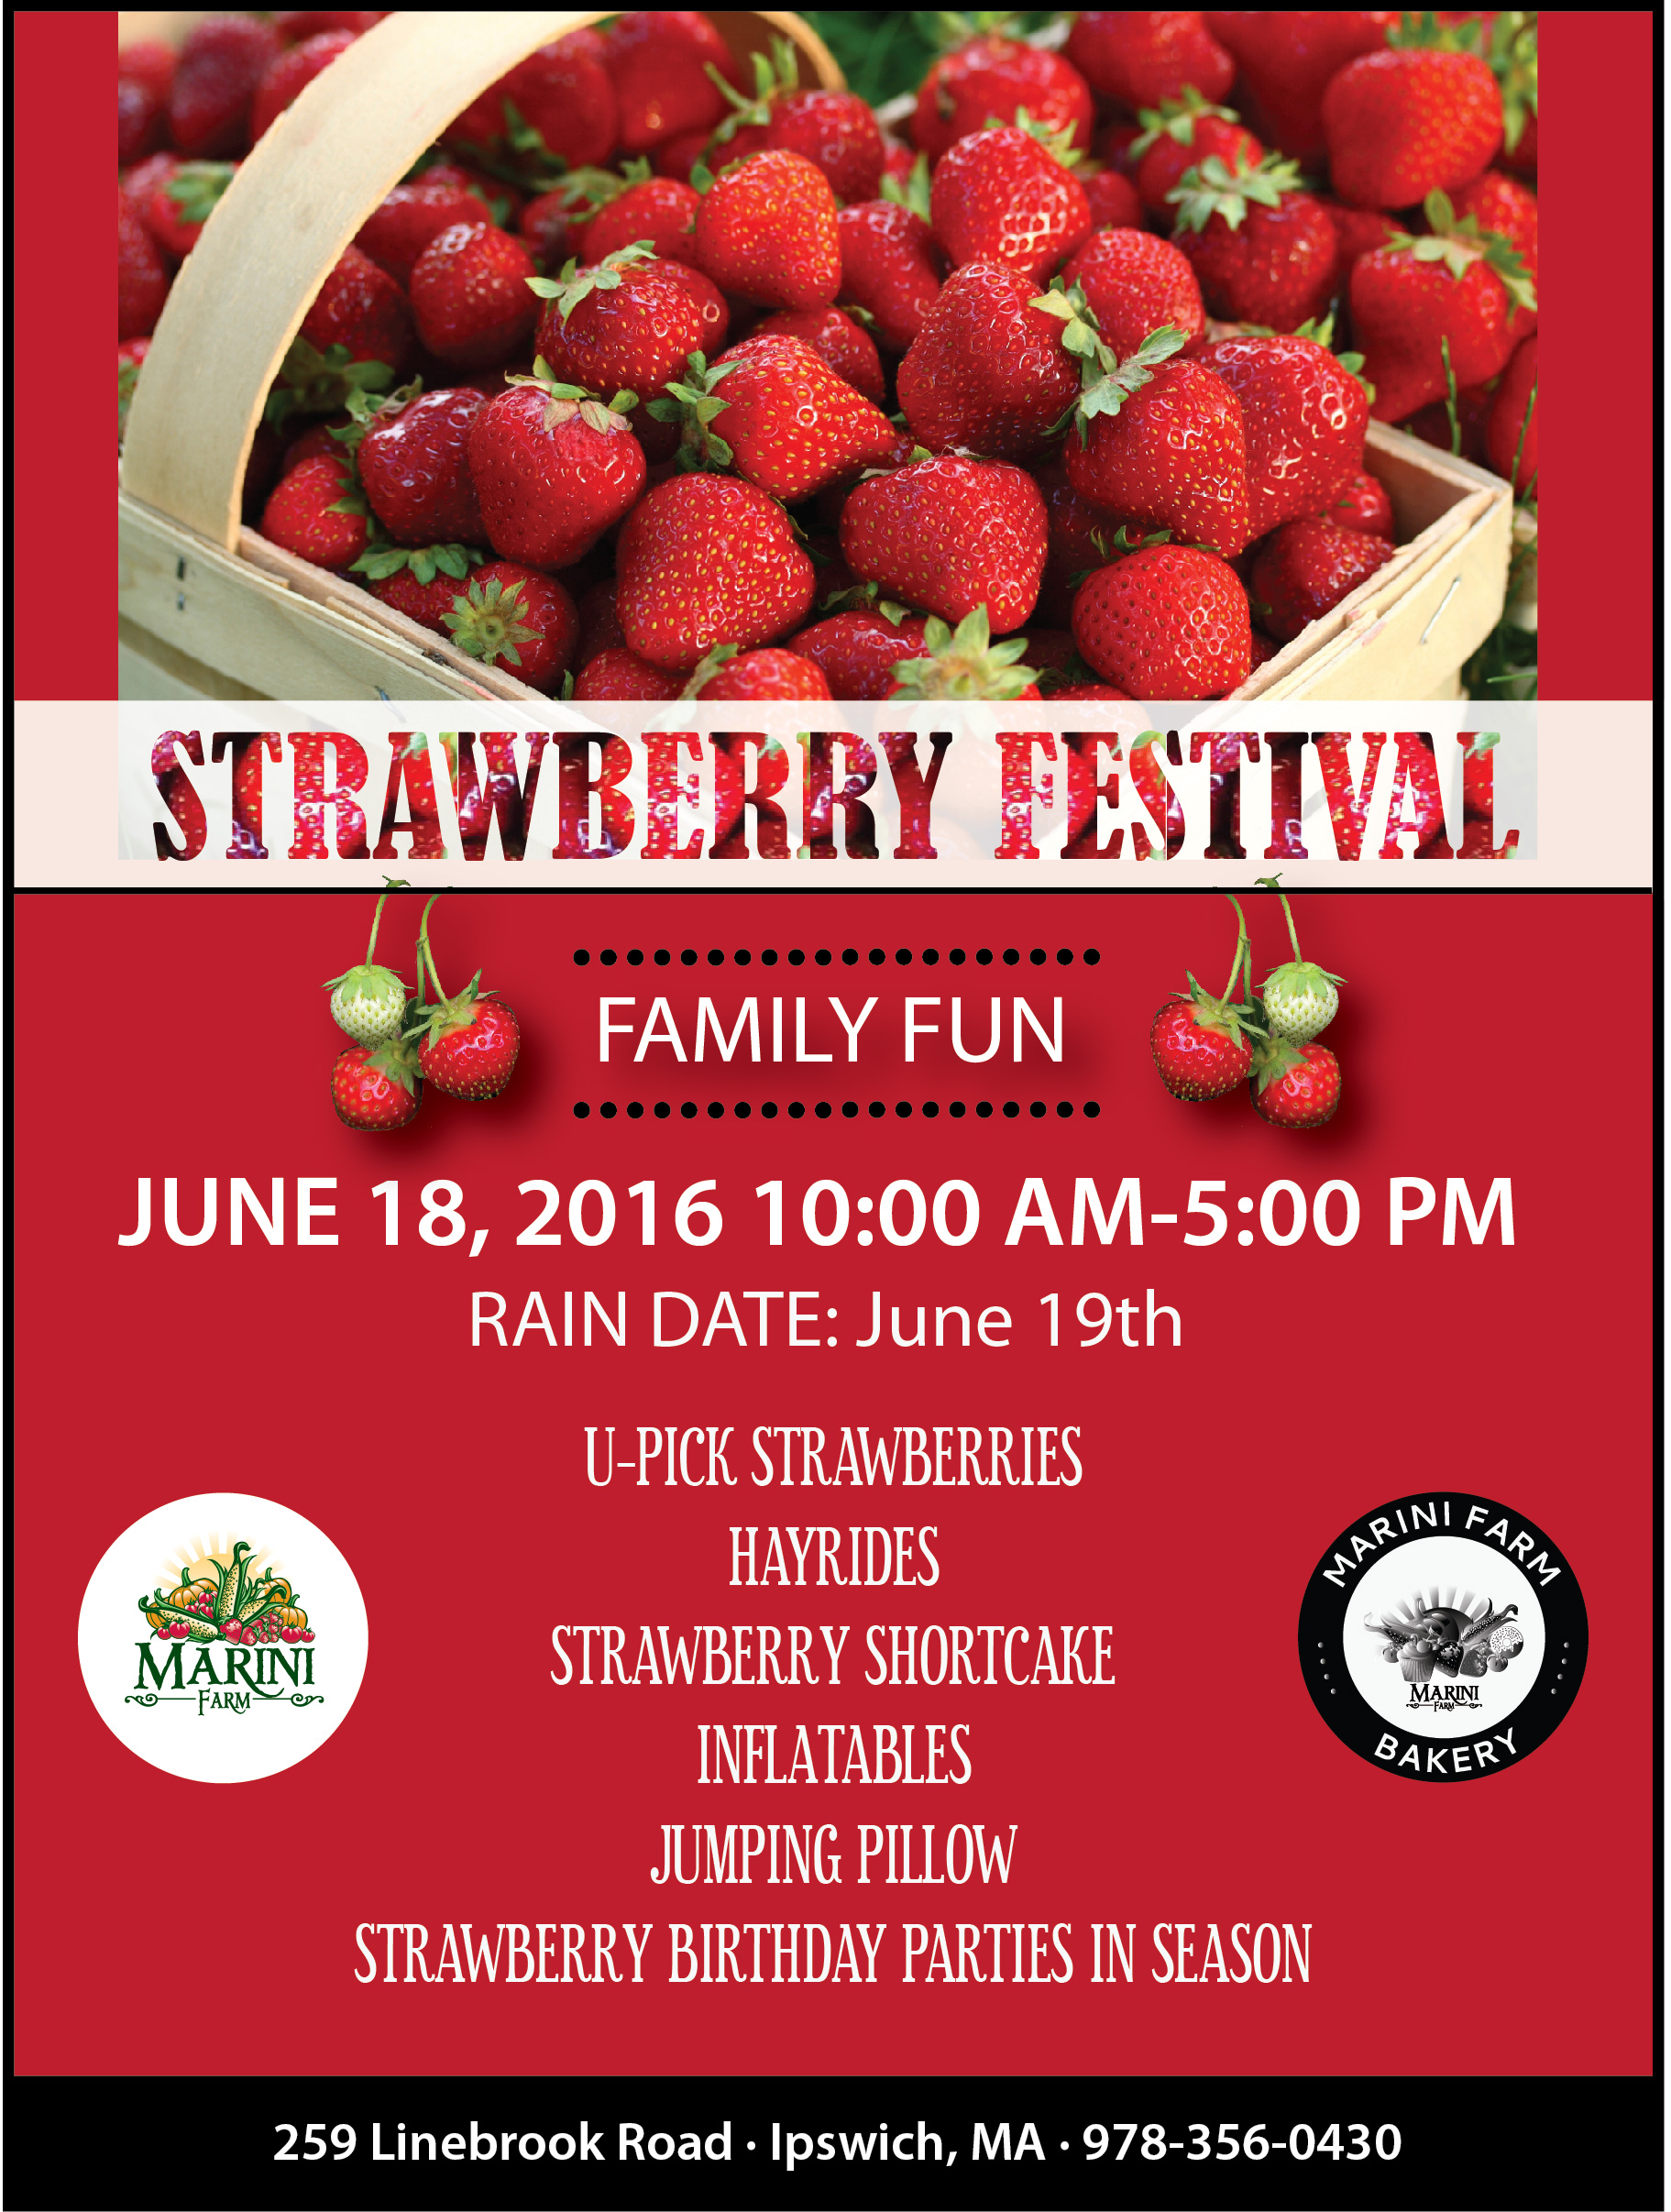 Marini Farm Strawberry Festival [06/18/16]